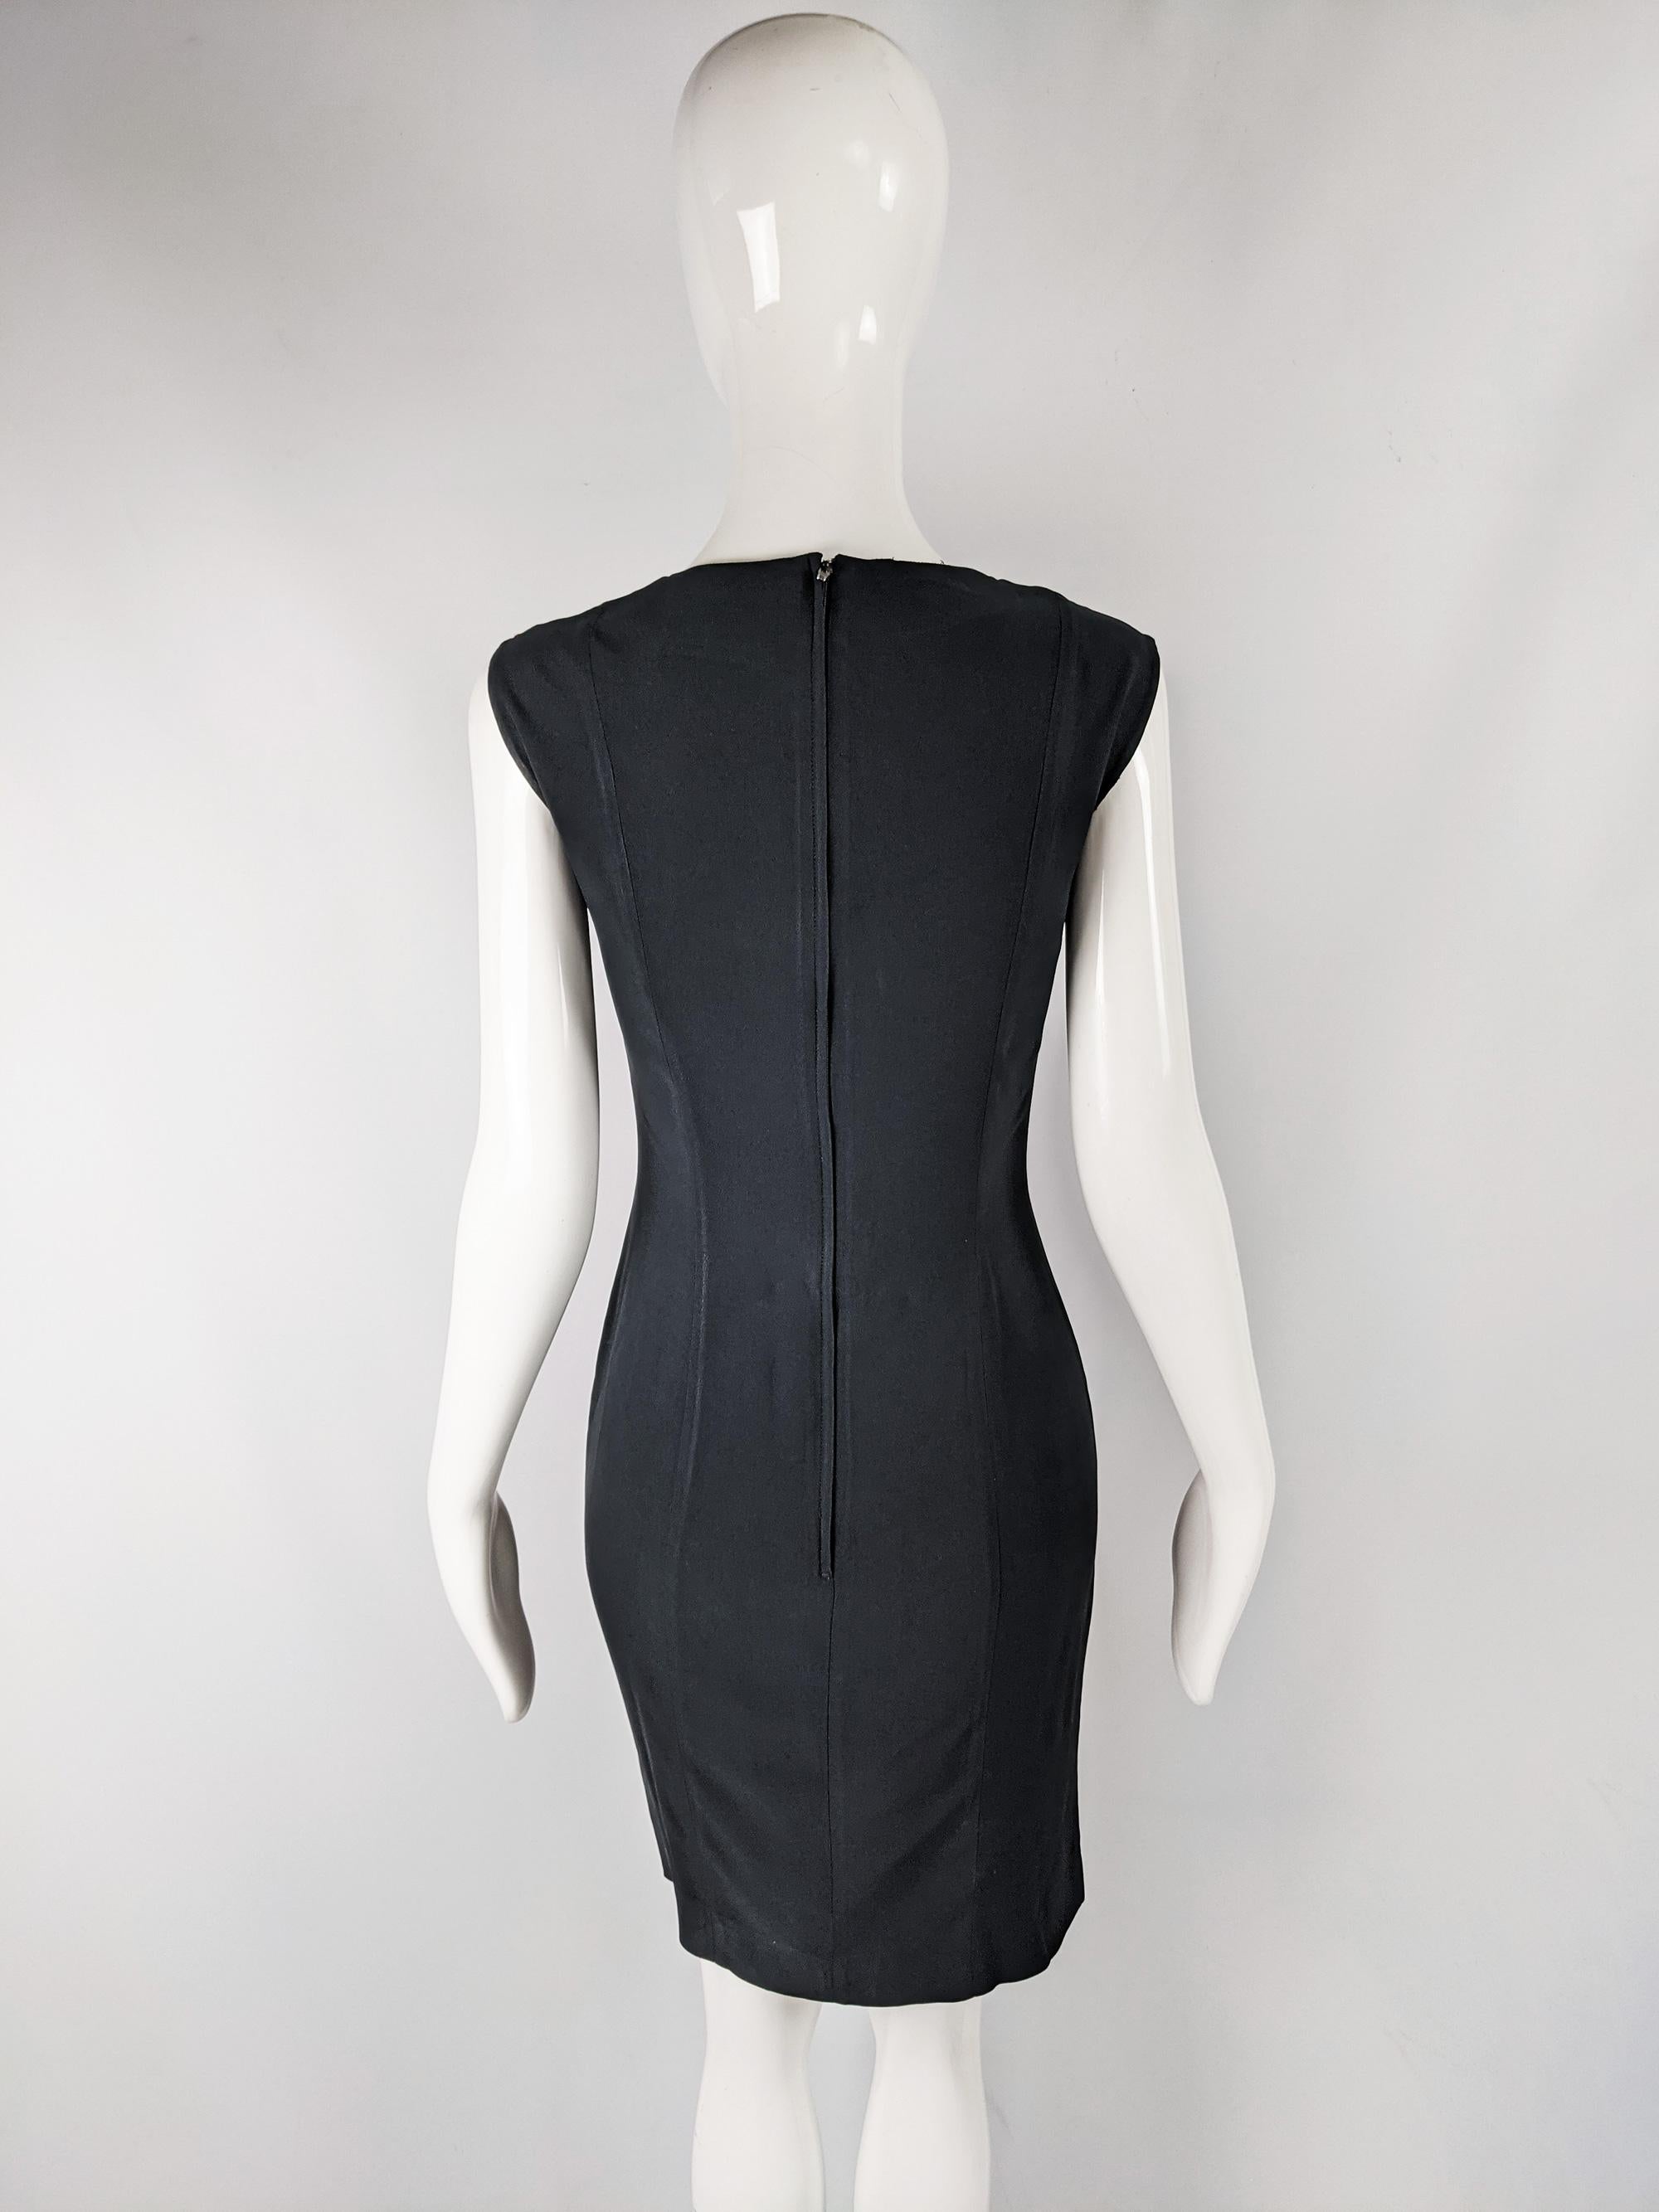 Moschino Couture Vintage Flamenco Dancer Style Trompe Loeil Illusion Dress 1